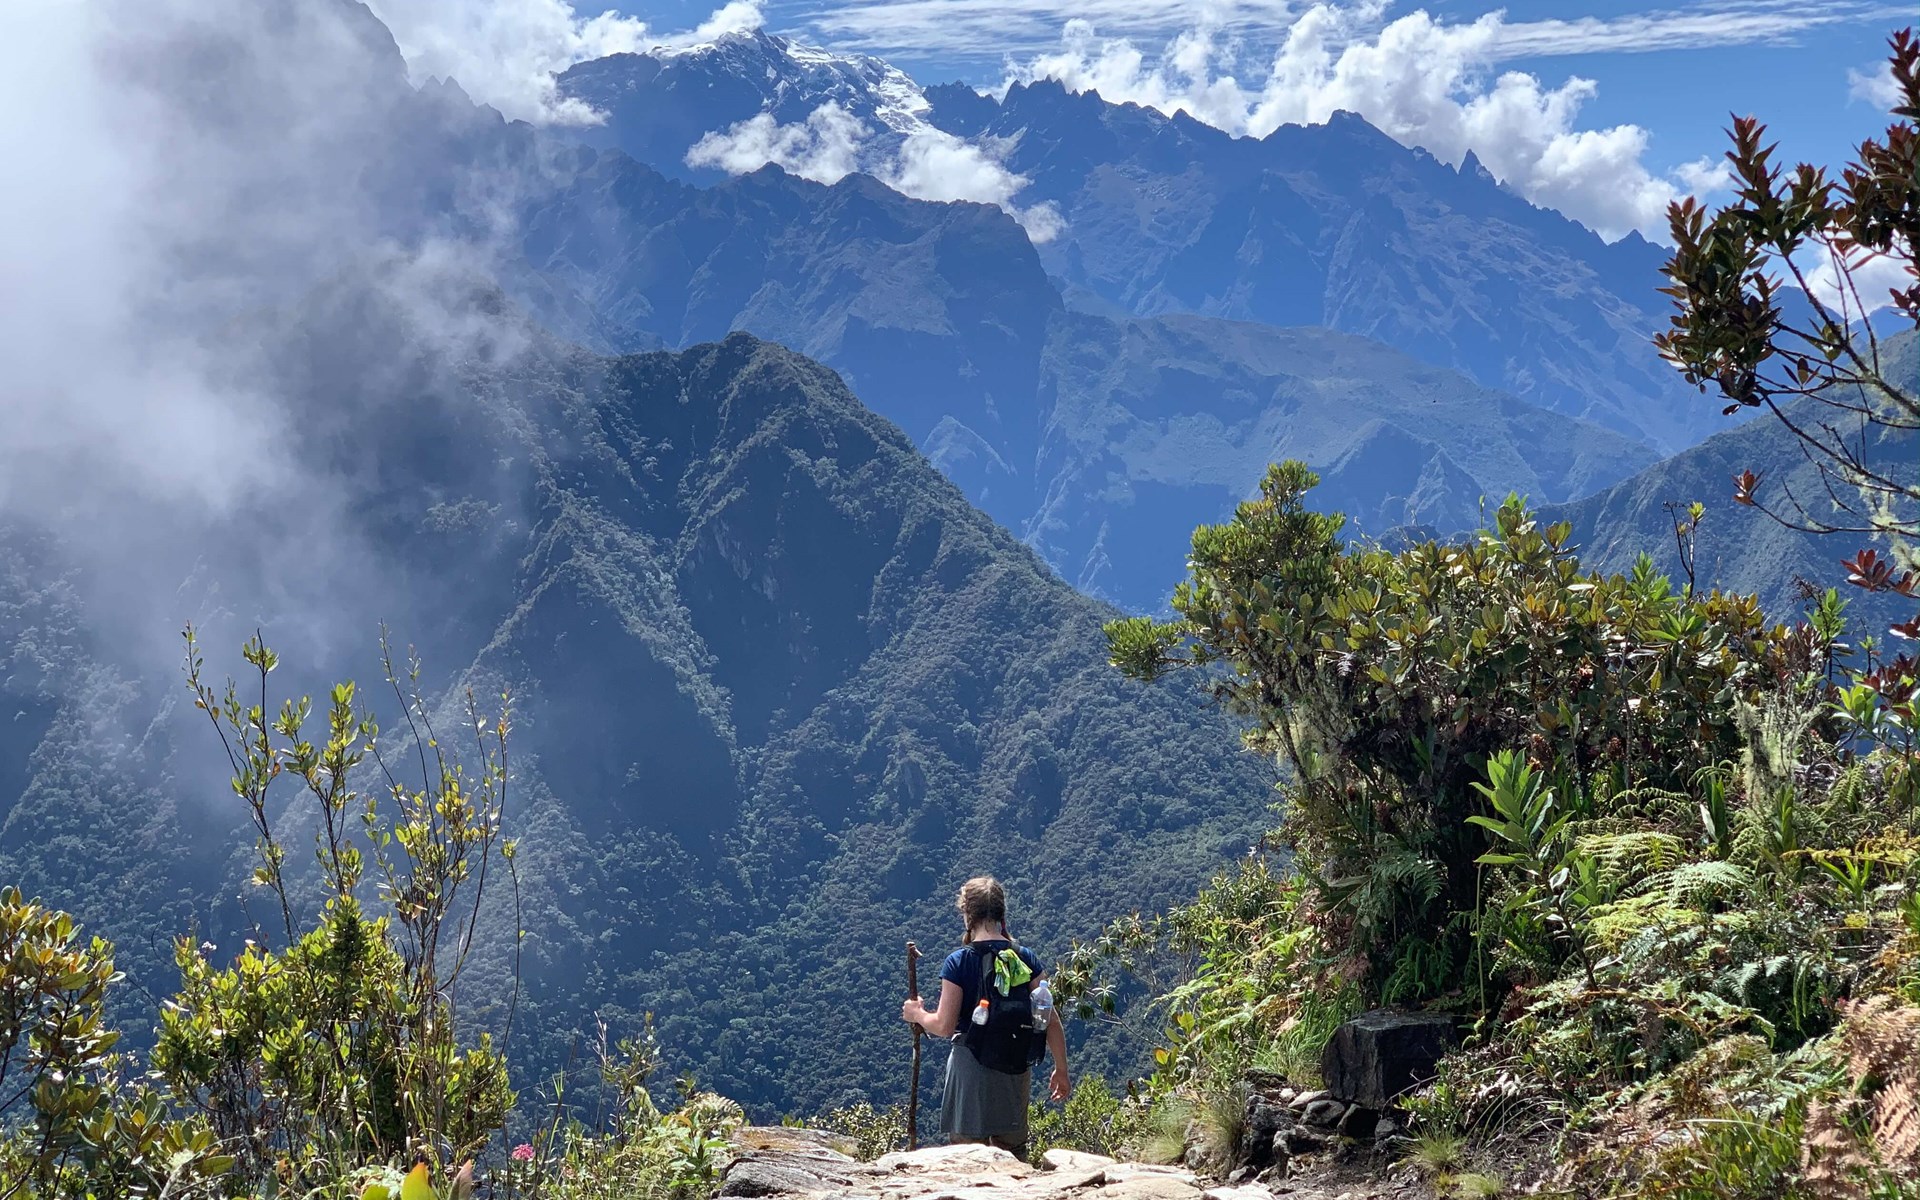 Tips for Trekking in Peru